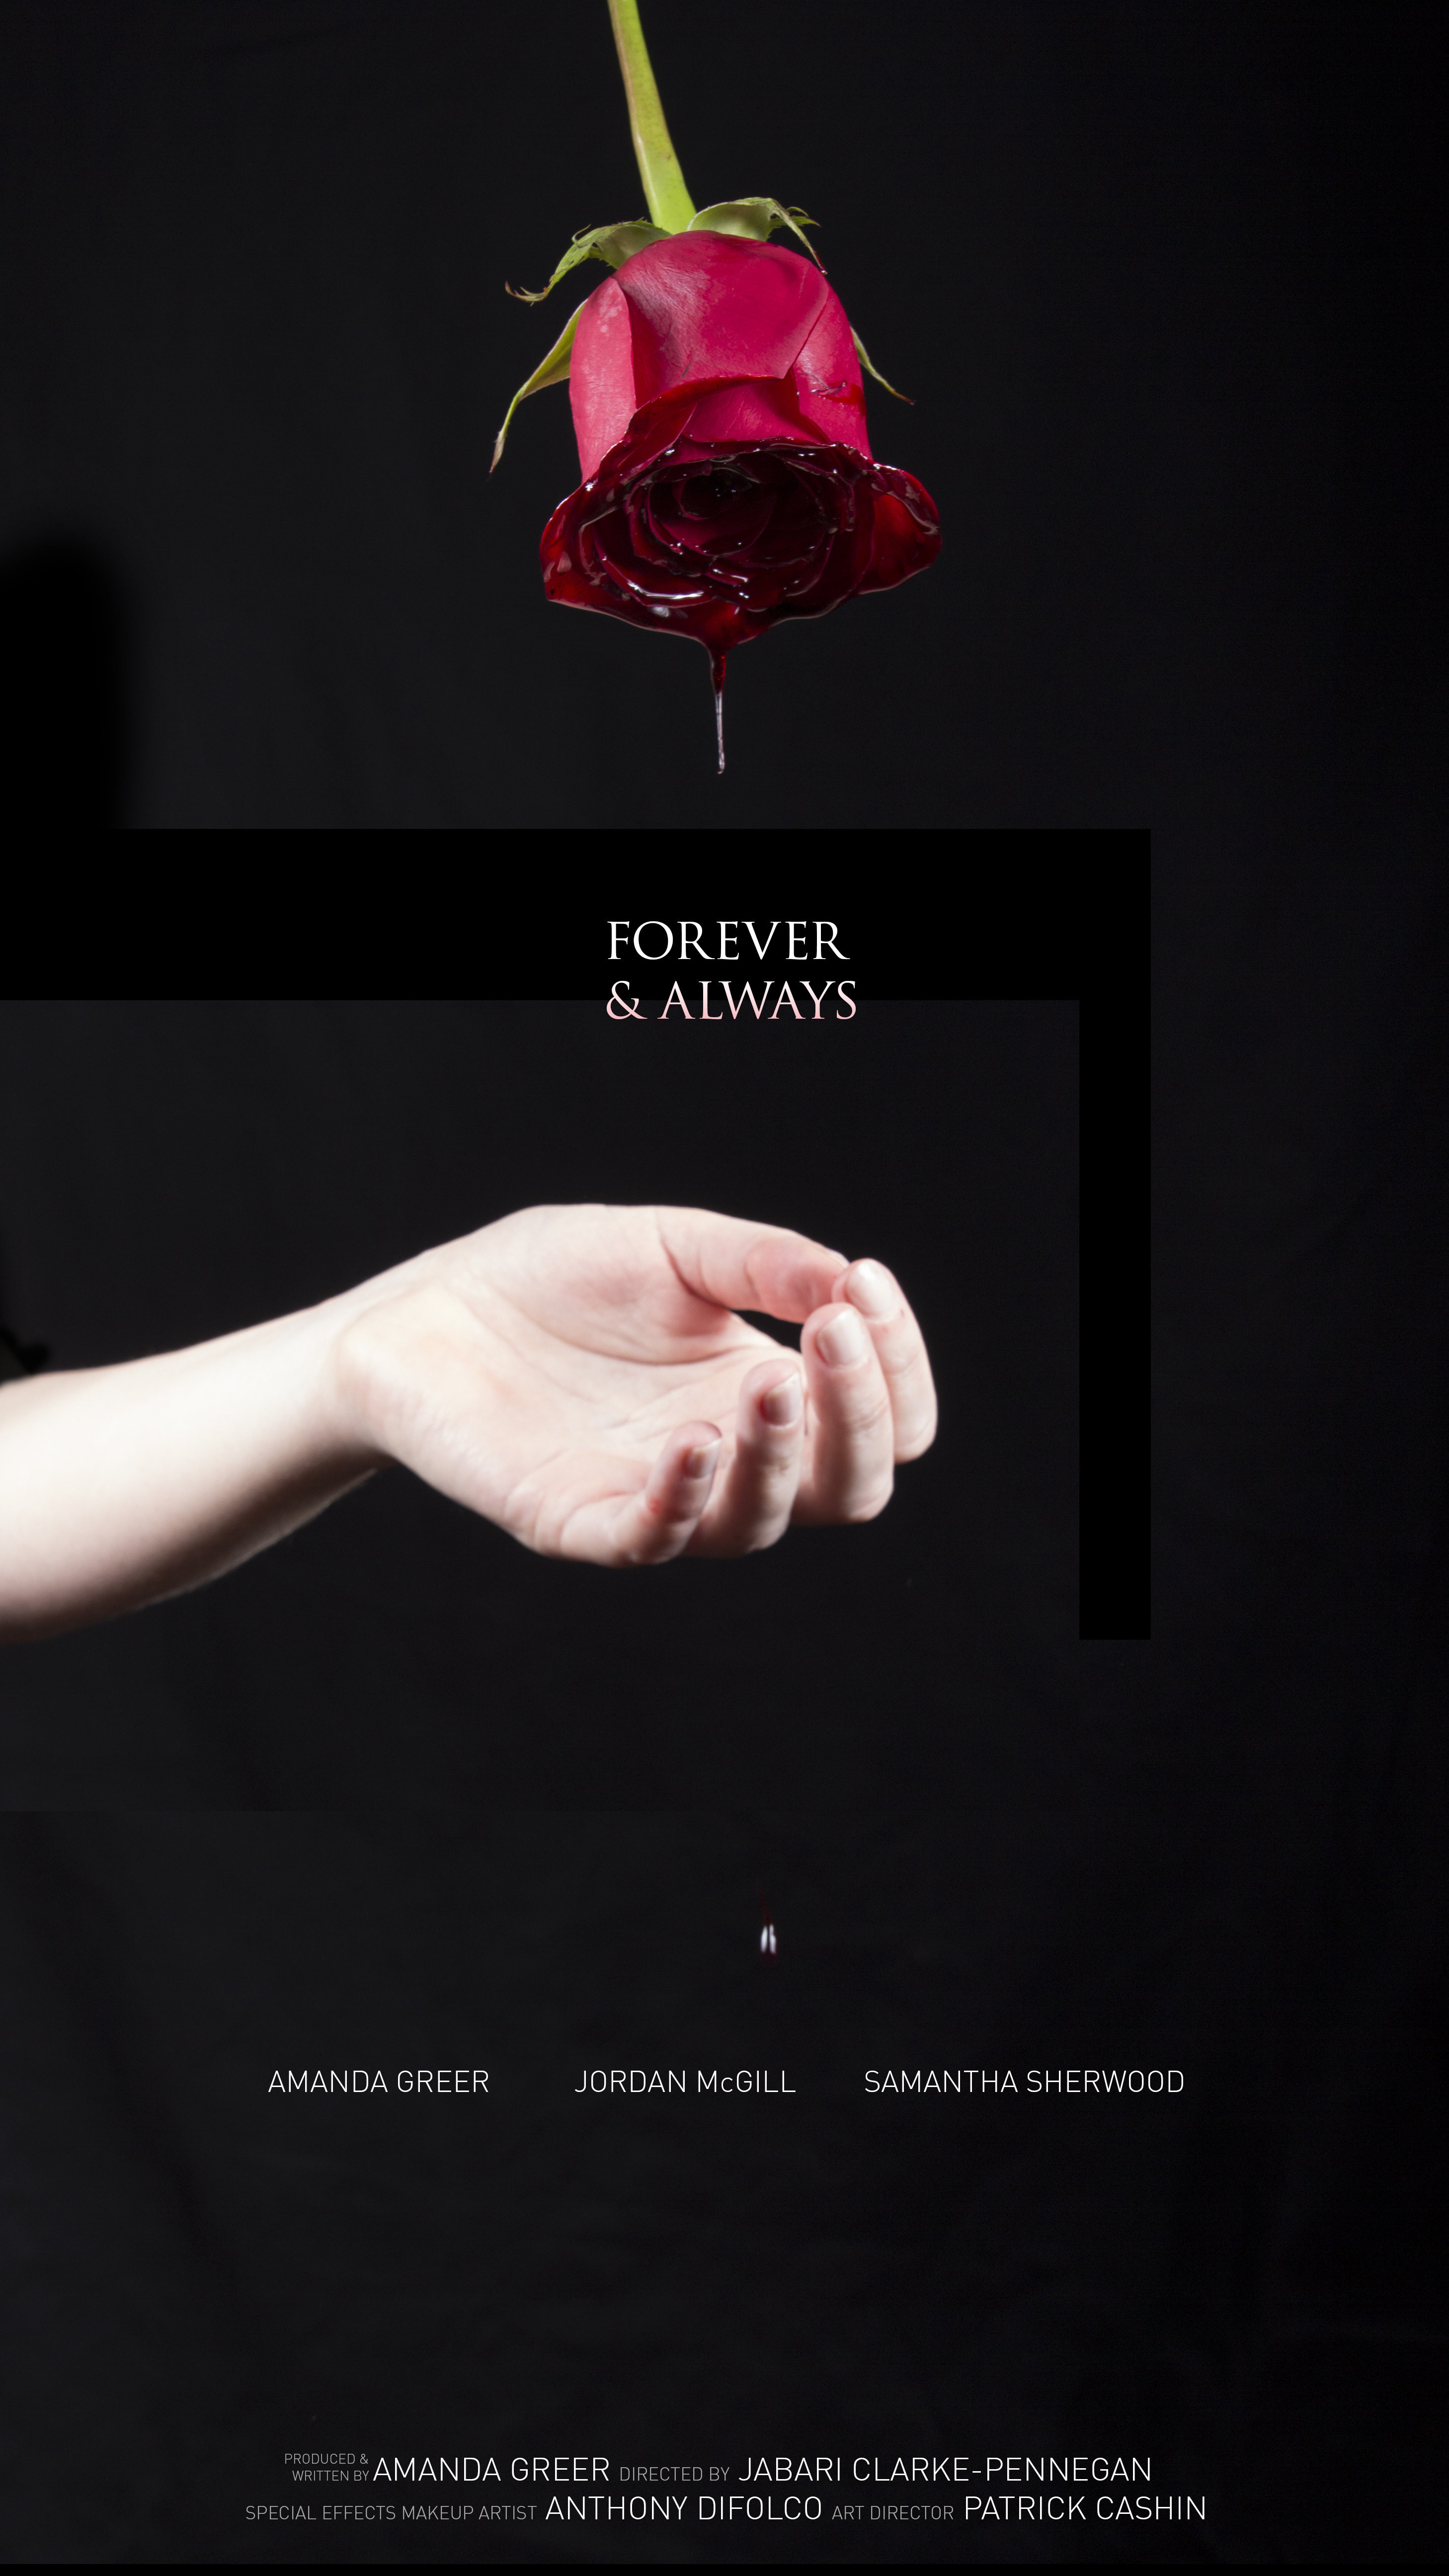 Amanda Greer in Forever & Always (2014)